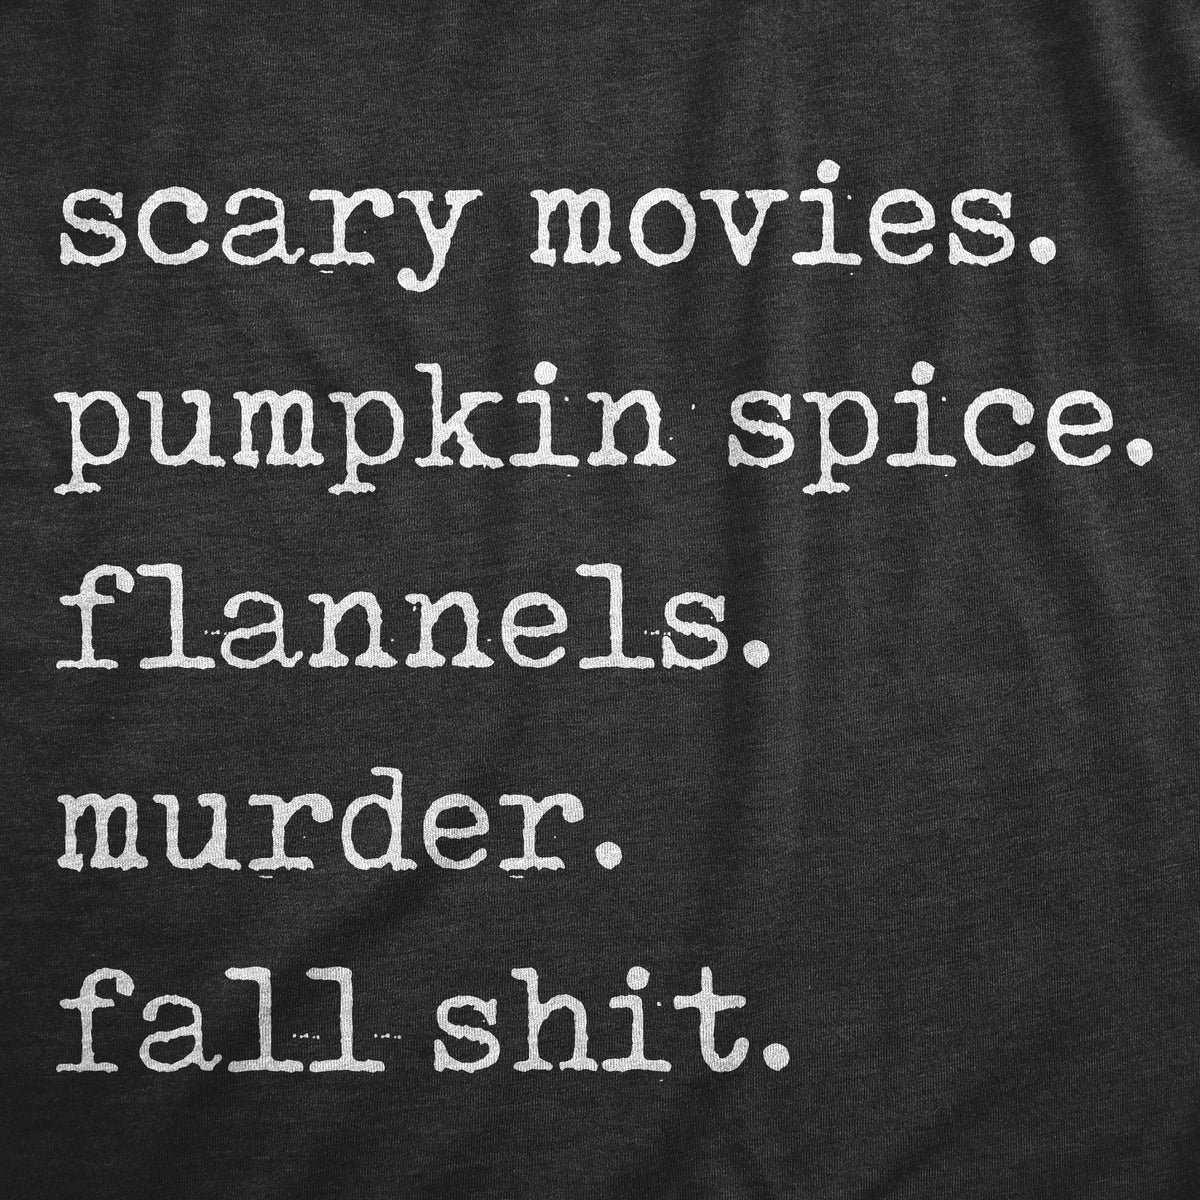 Scary Movies Pumpkin Spice Flannels Murder Fall Shit Women&#39;s T Shirt